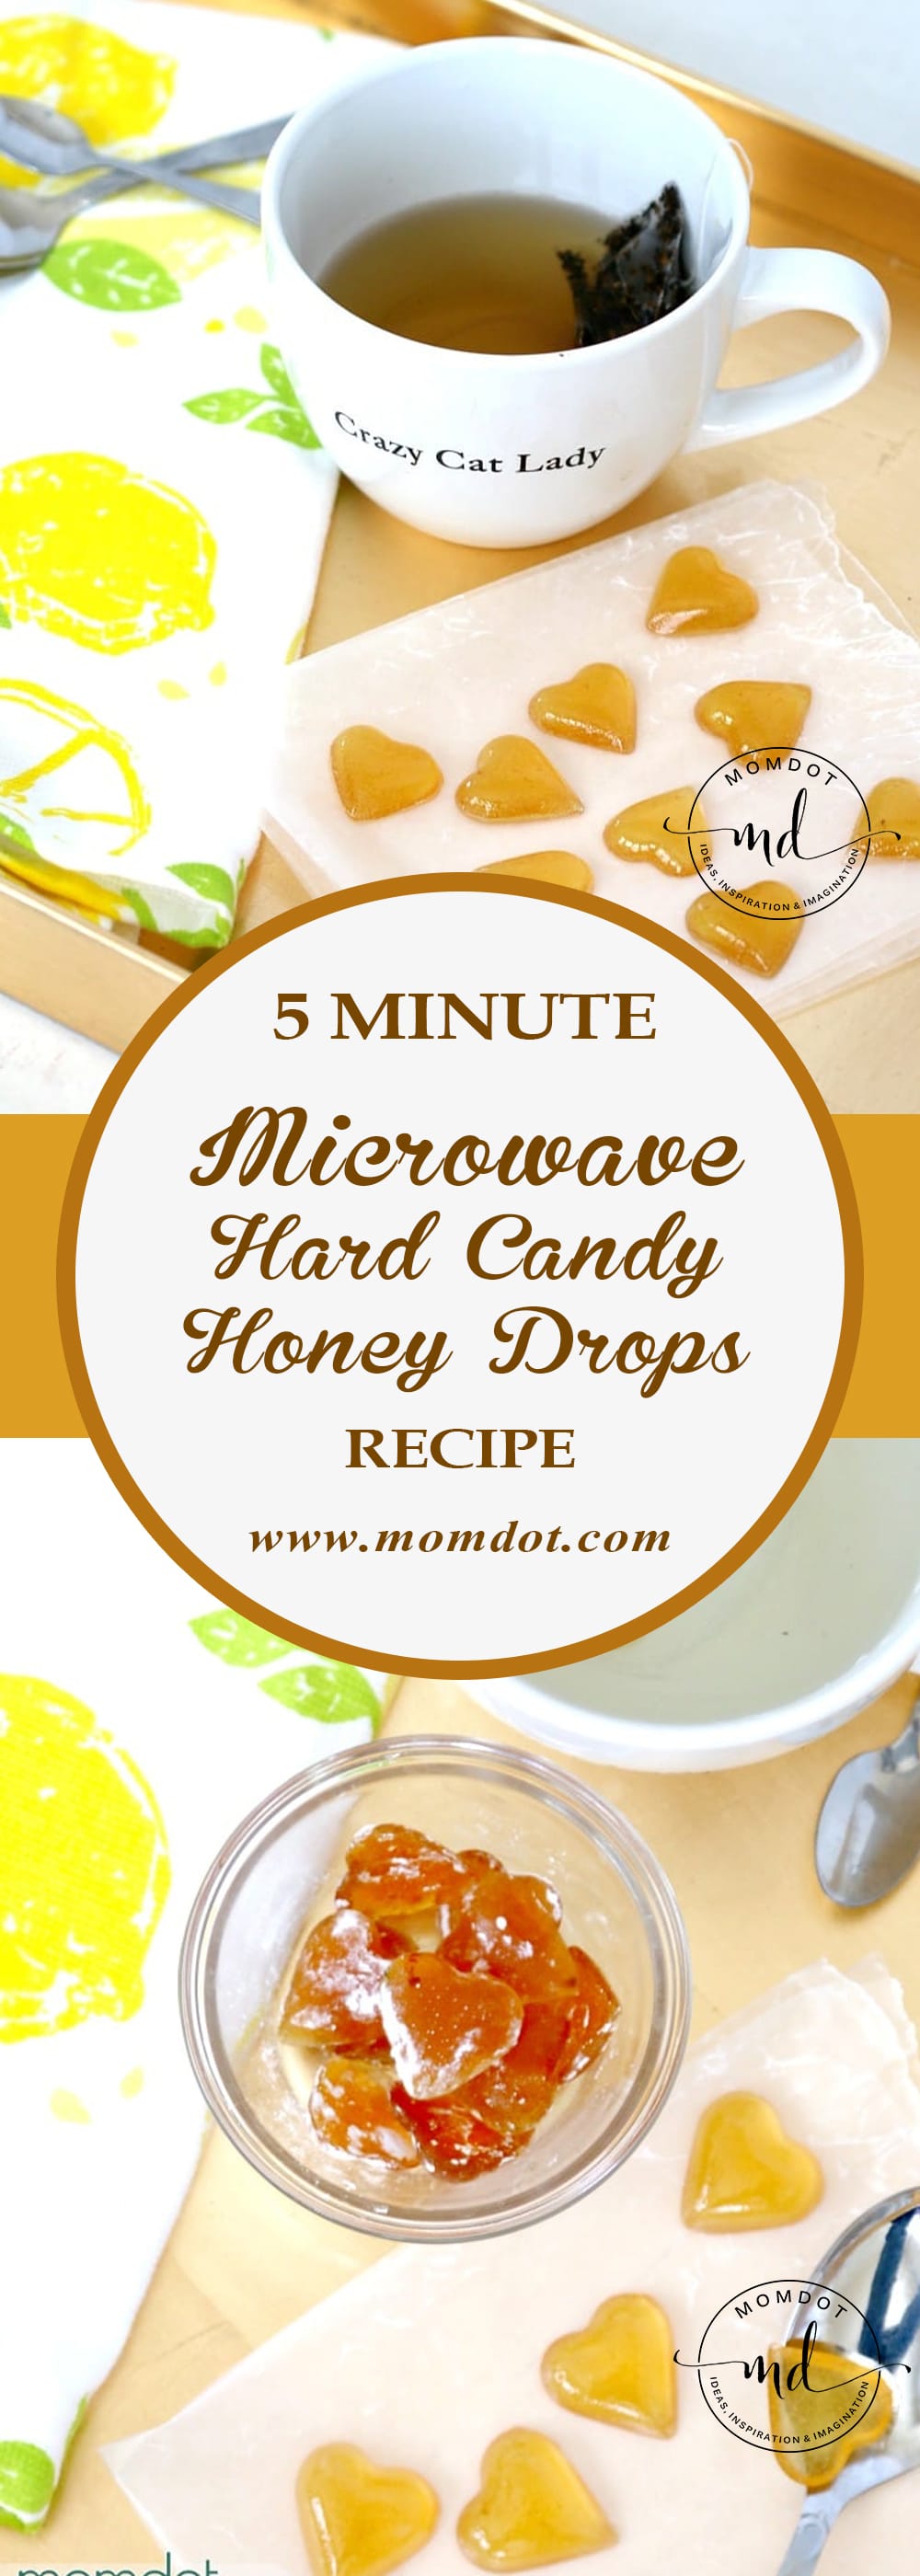 Hard Candy Recipe - Microwave